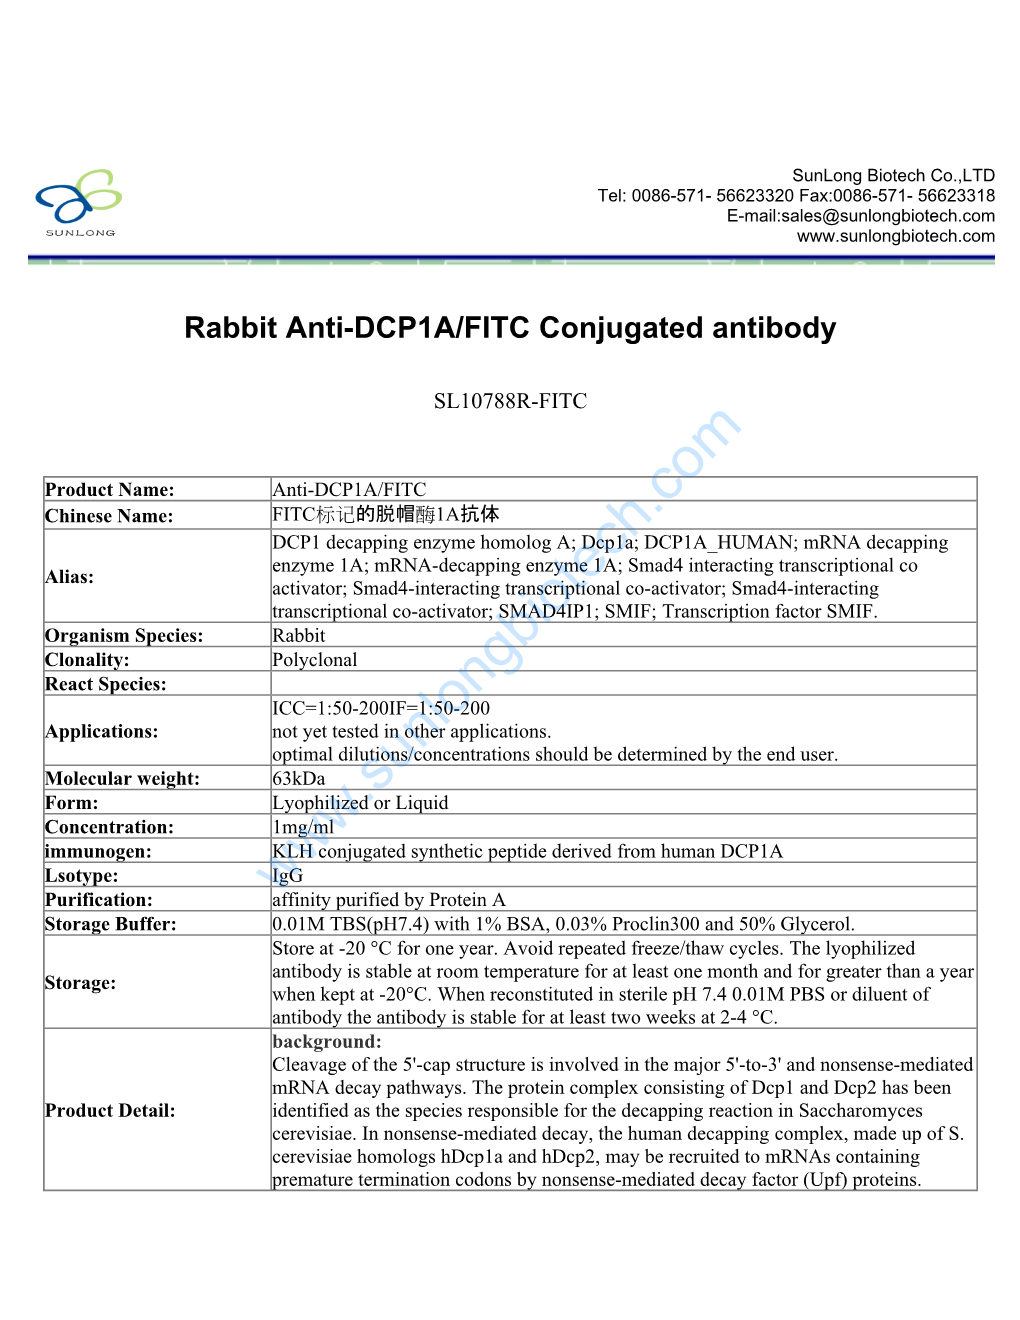 Rabbit Anti-DCP1A/FITC Conjugated Antibody